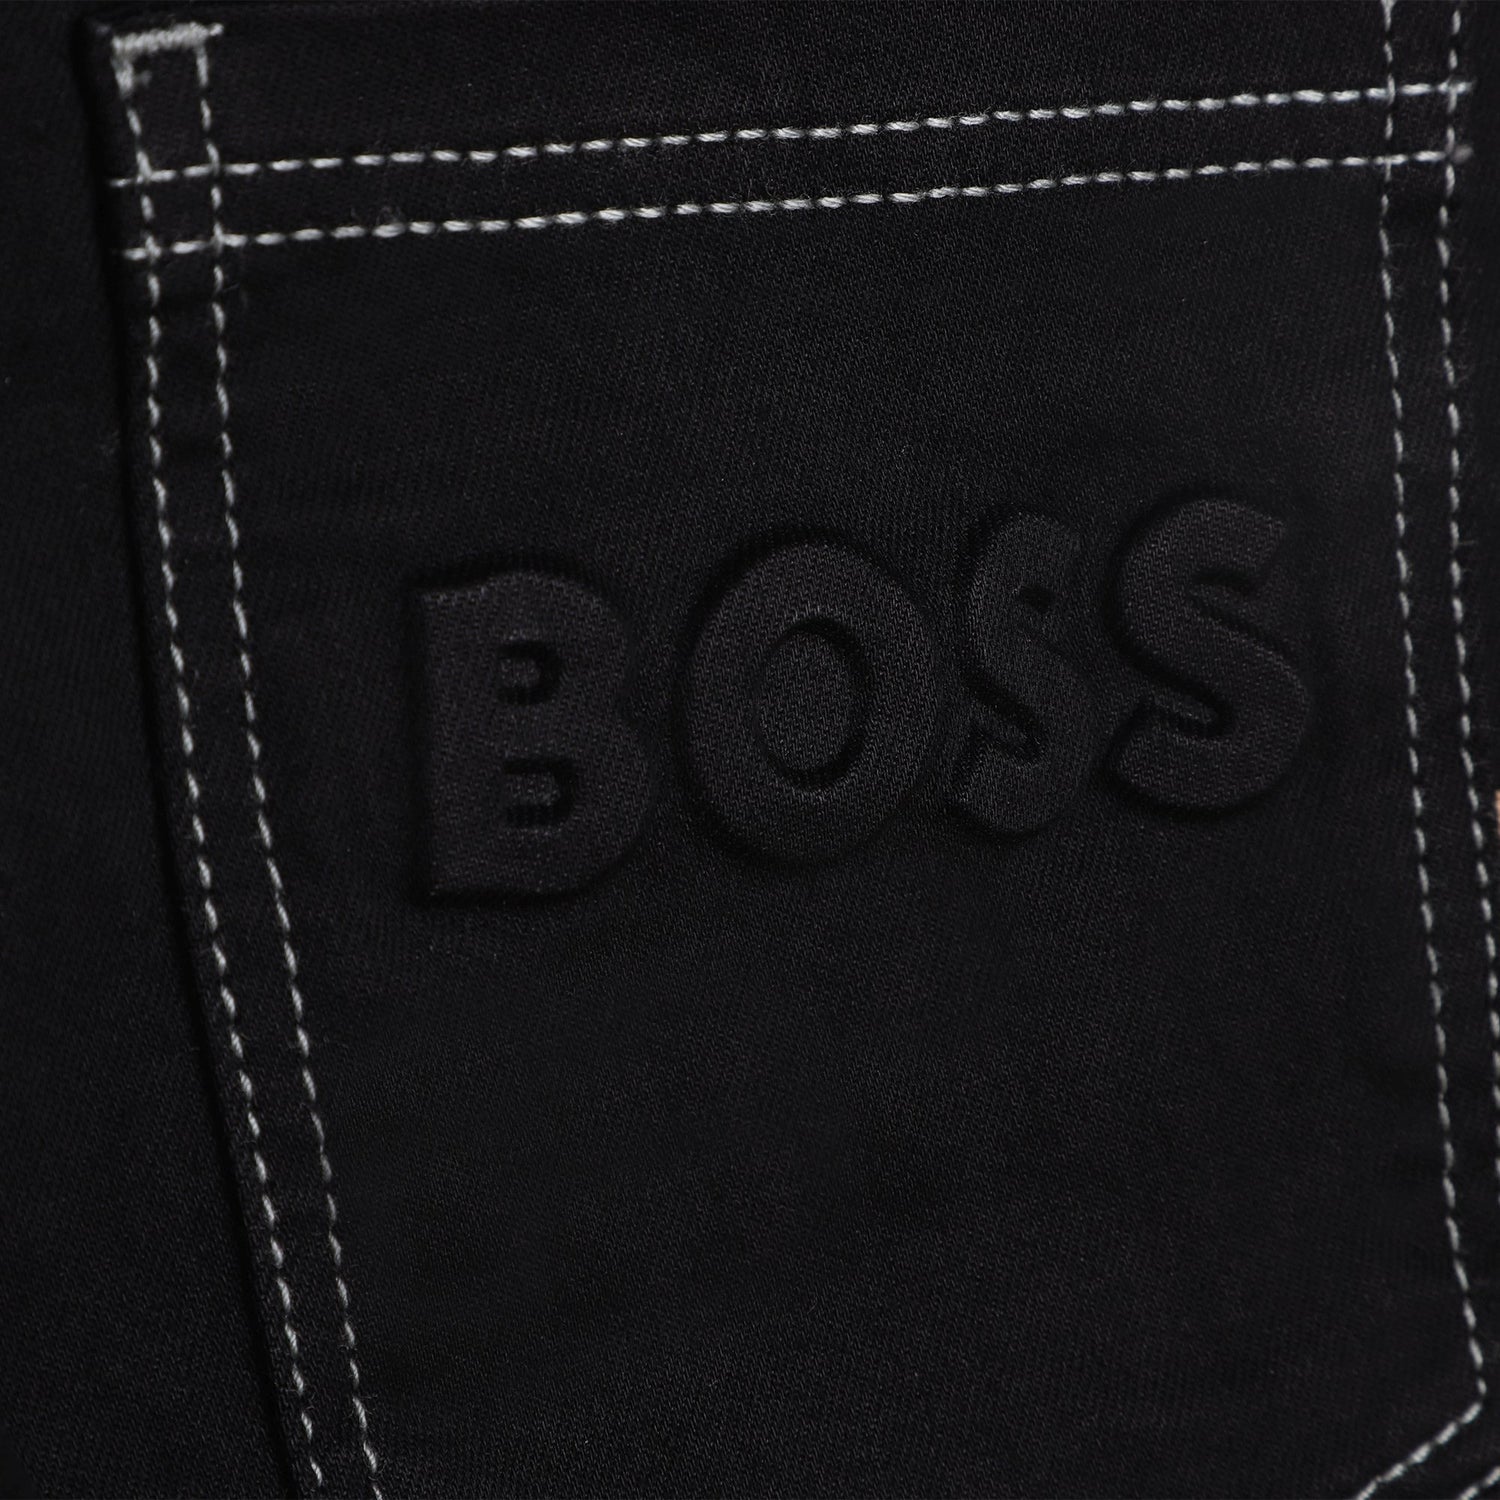 Hugo Boss Denim Trousers Style: J24875